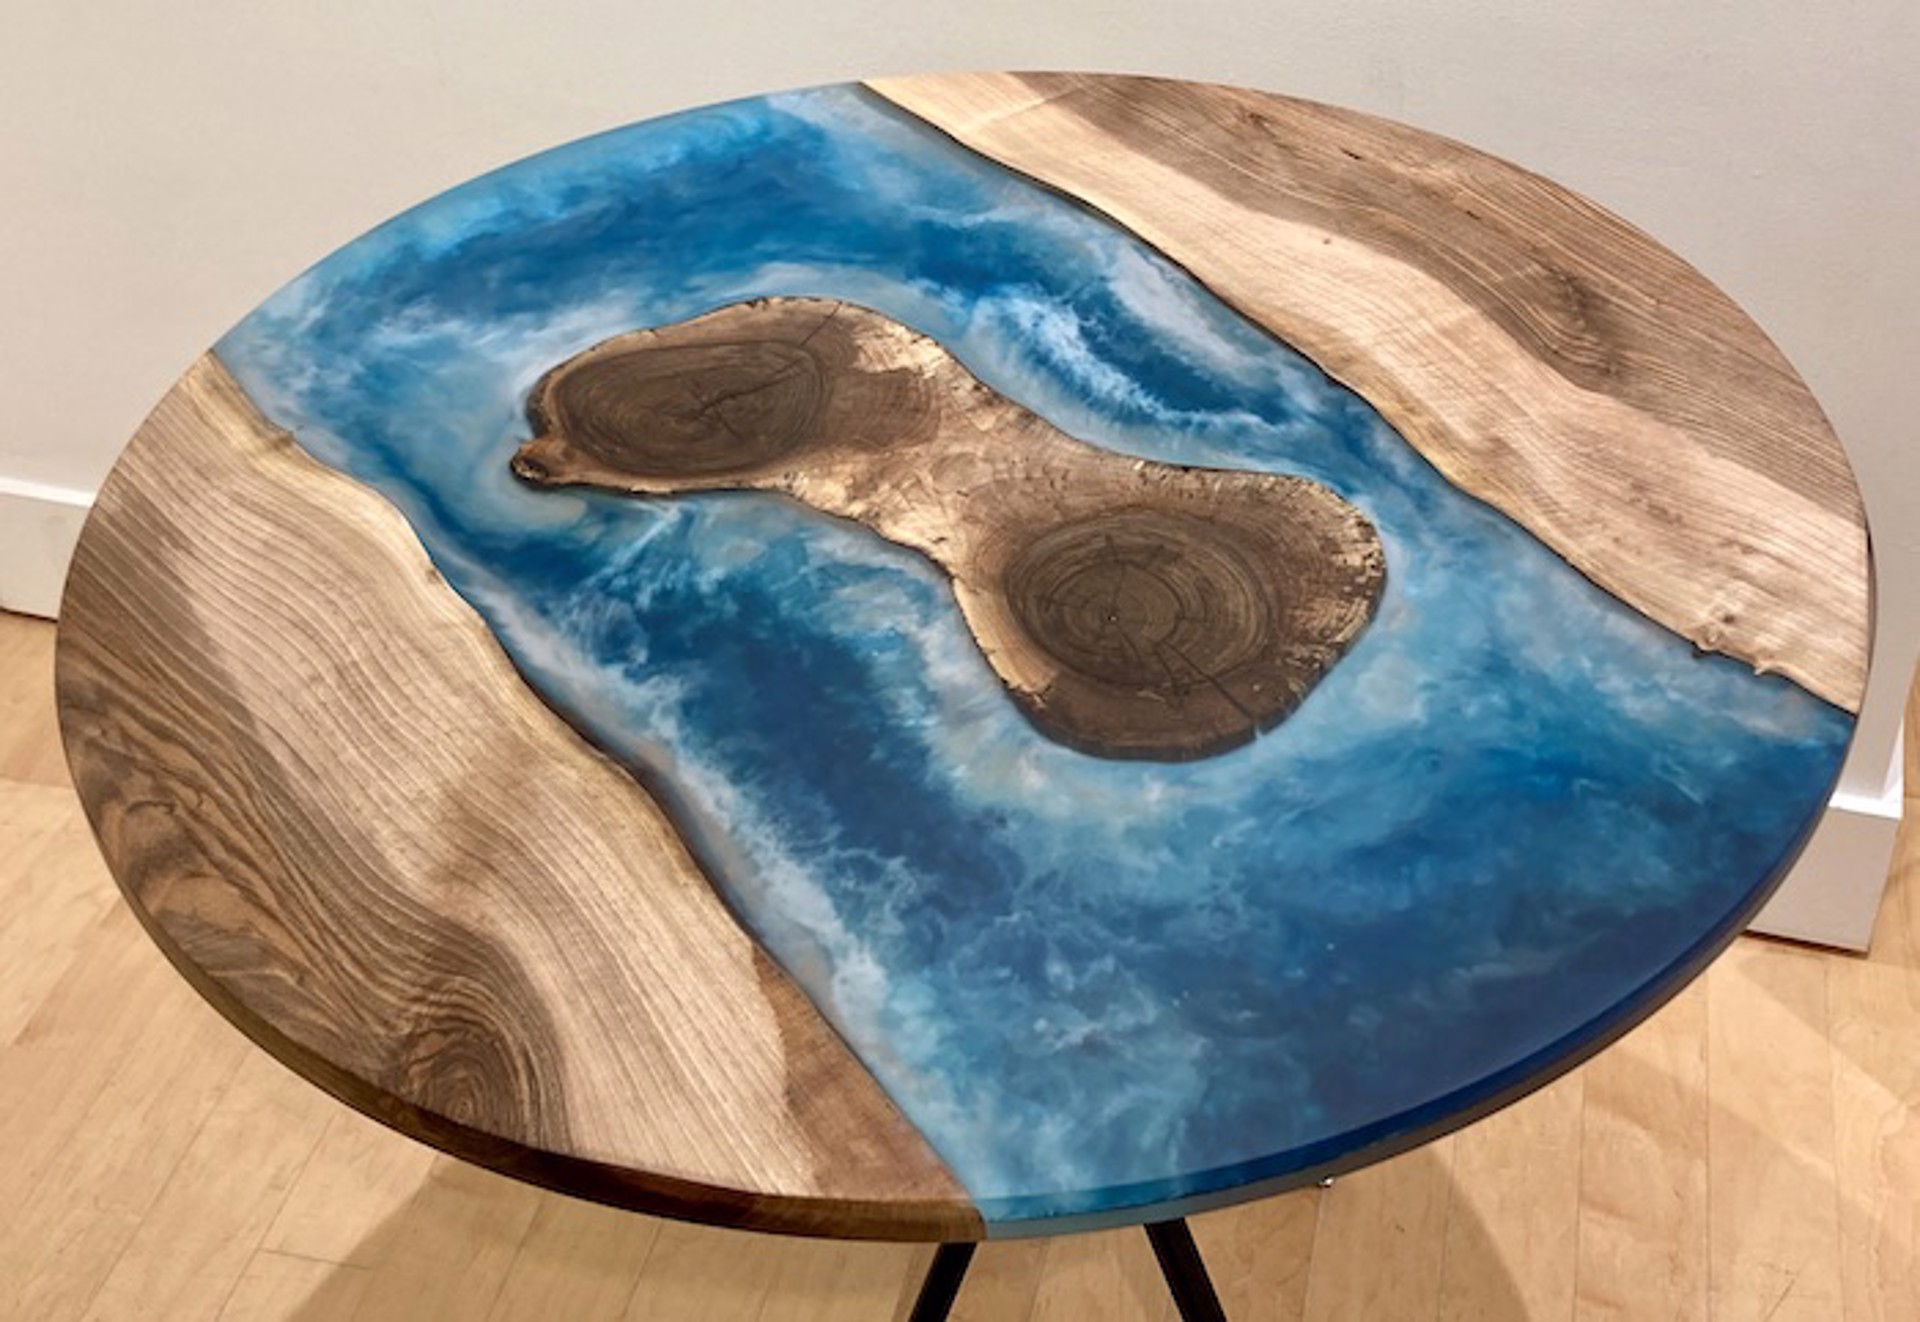 Wave Table by Benjamin McLaughlin